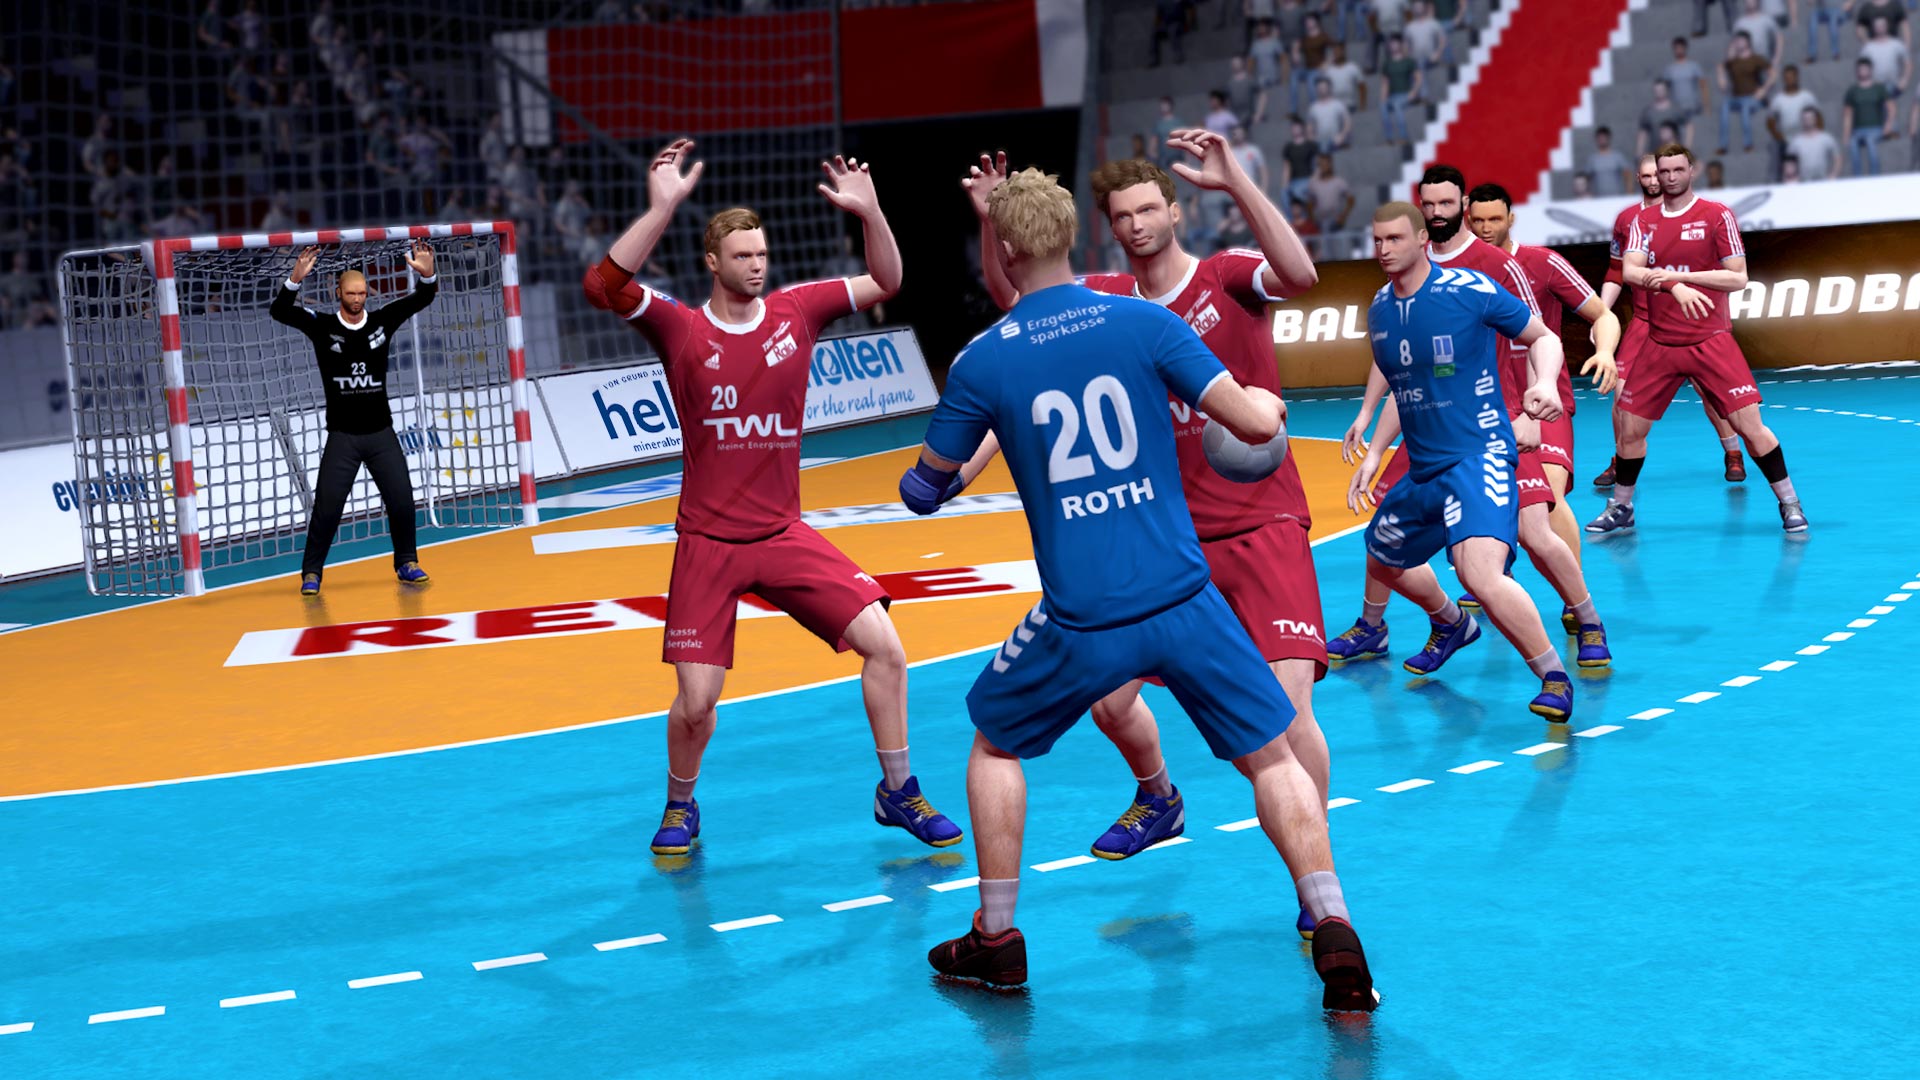 Handball 17 - screenshot 5